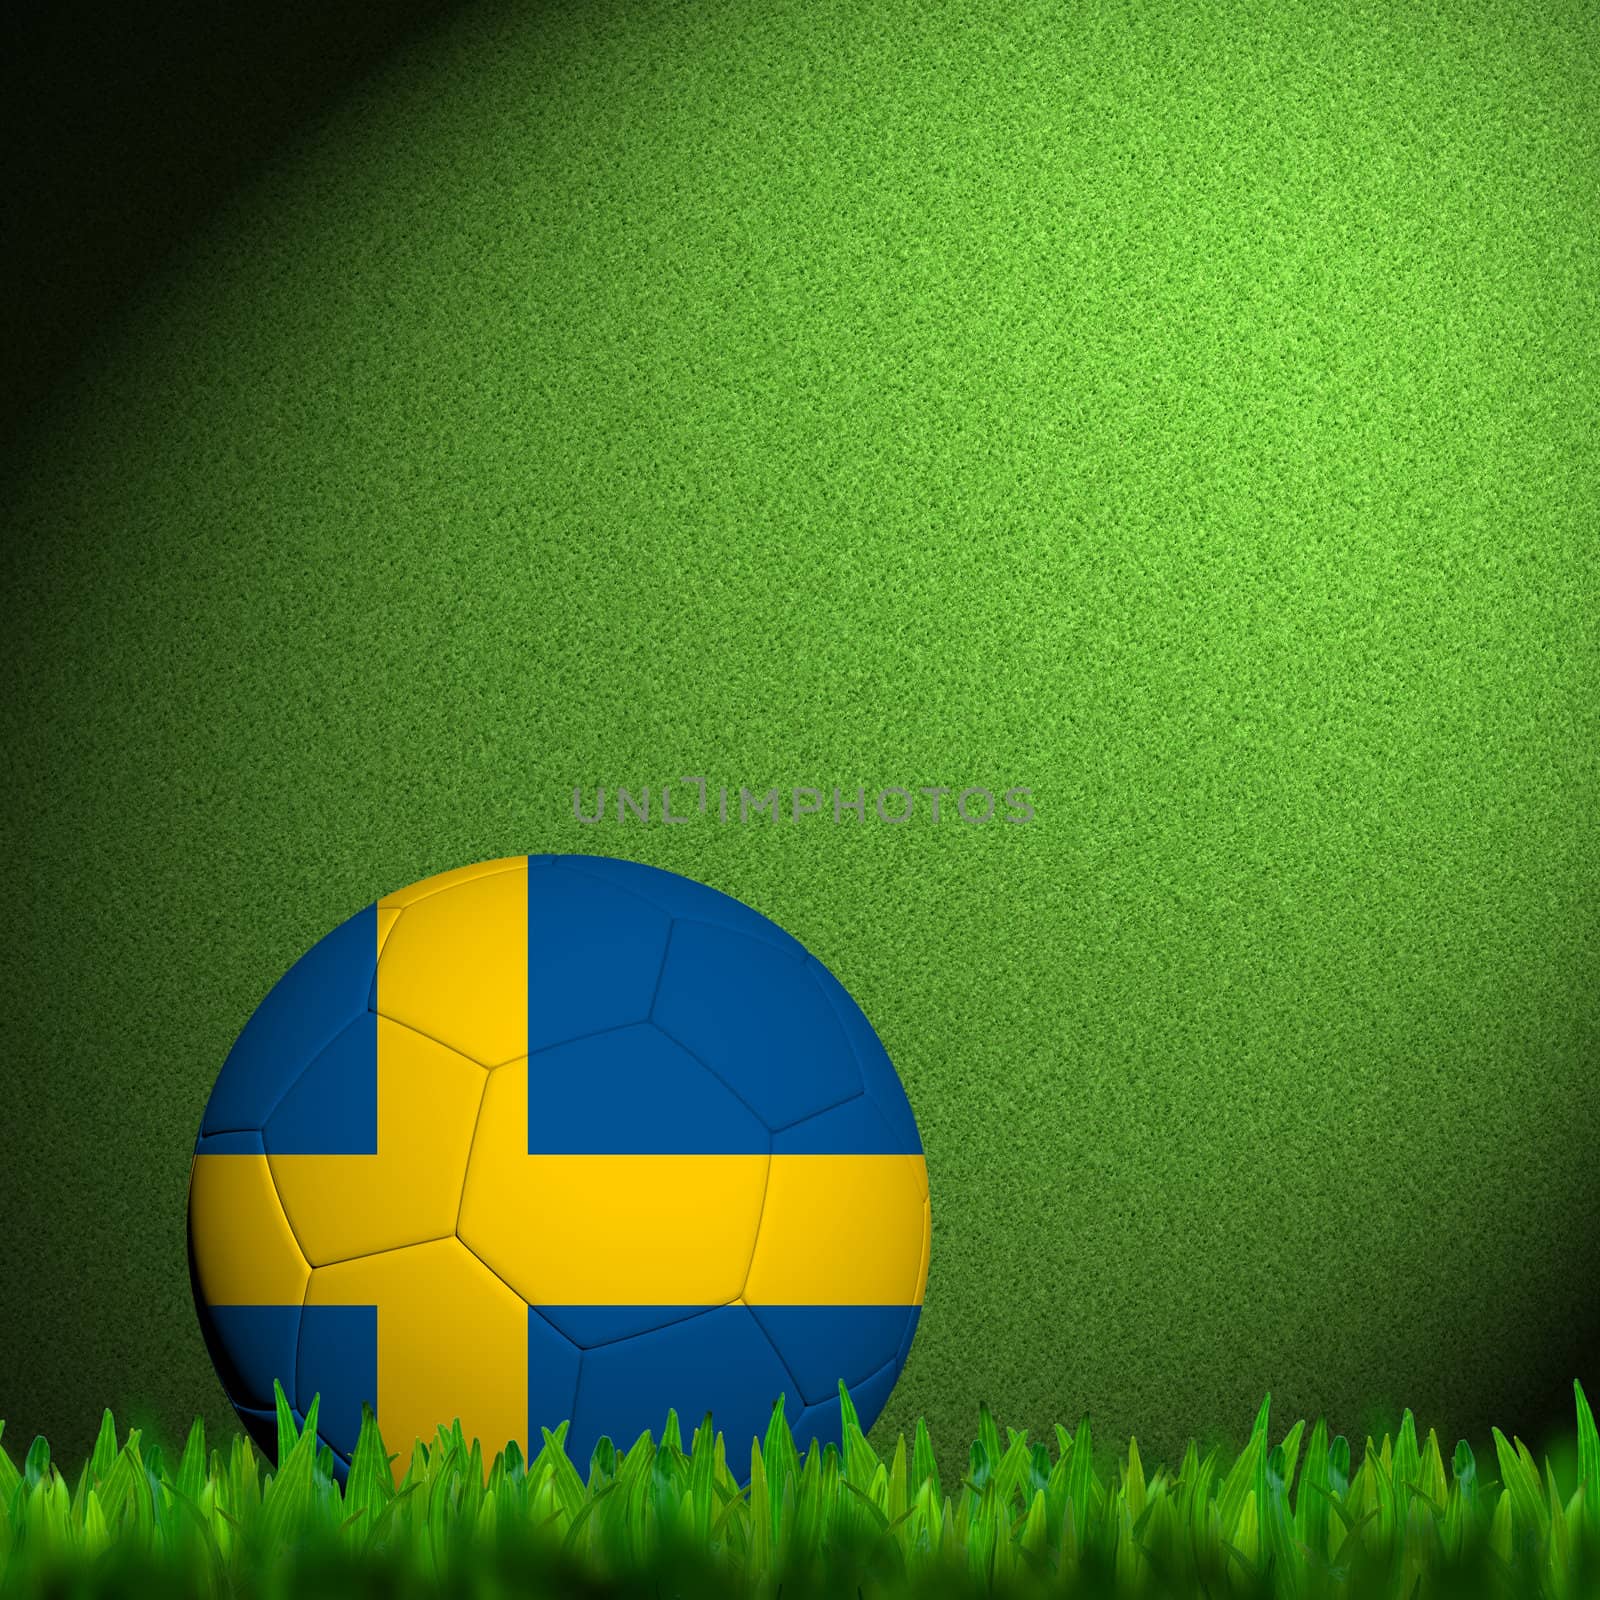 3D Football Sweden Flag Patter in green grass by jakgree